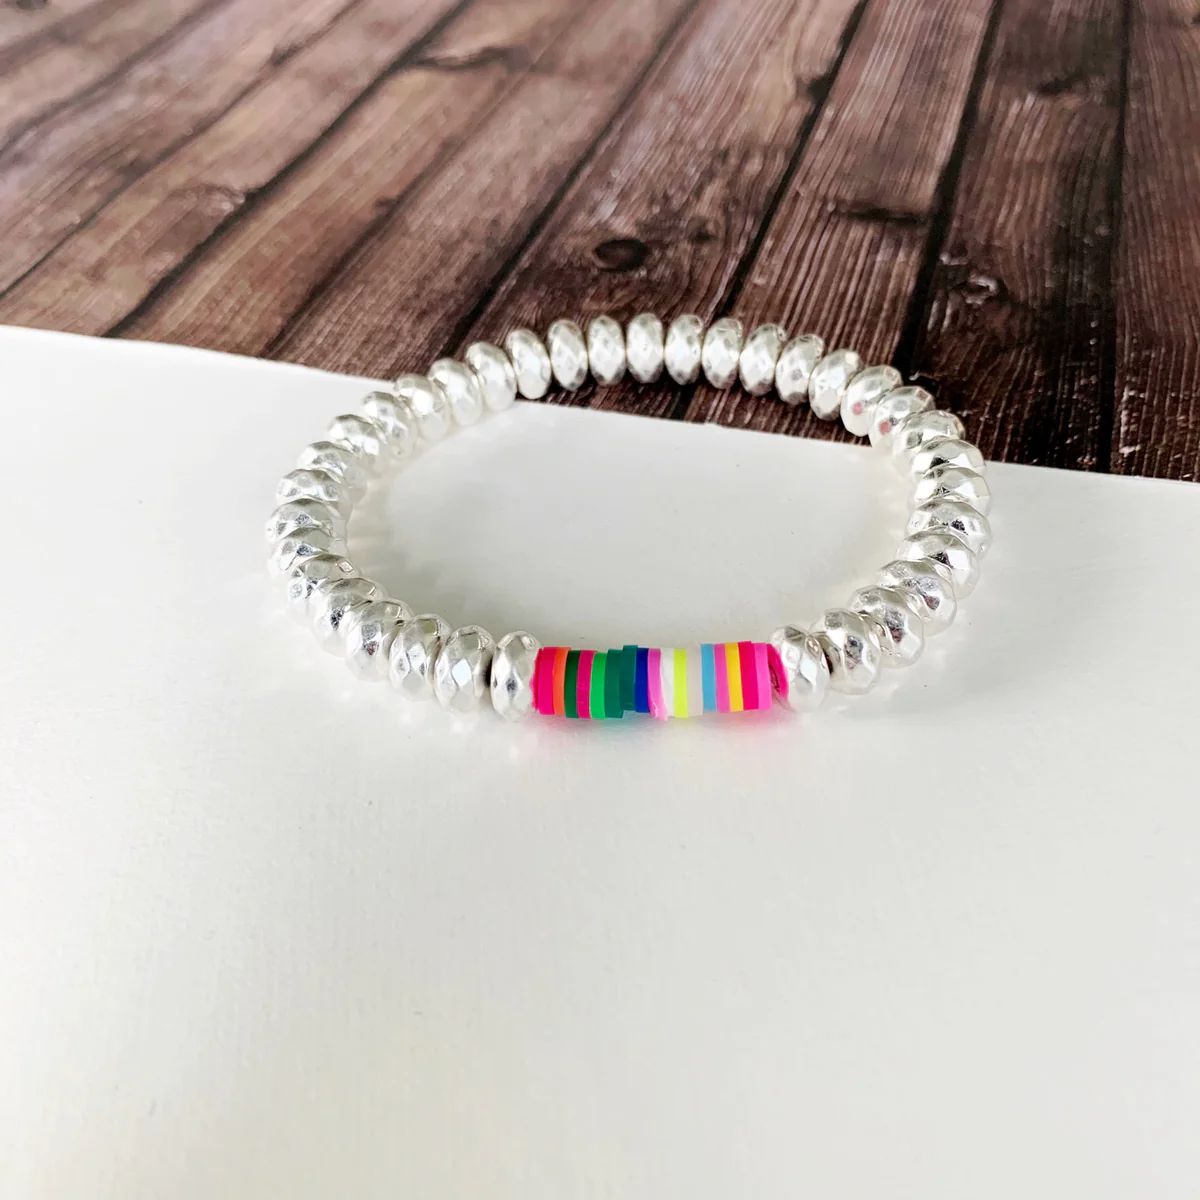 Boutique Bracelet Collection :: Kilty Silver Ball Bead Bracelet with Neon Disc Accents | Baubles & Bits